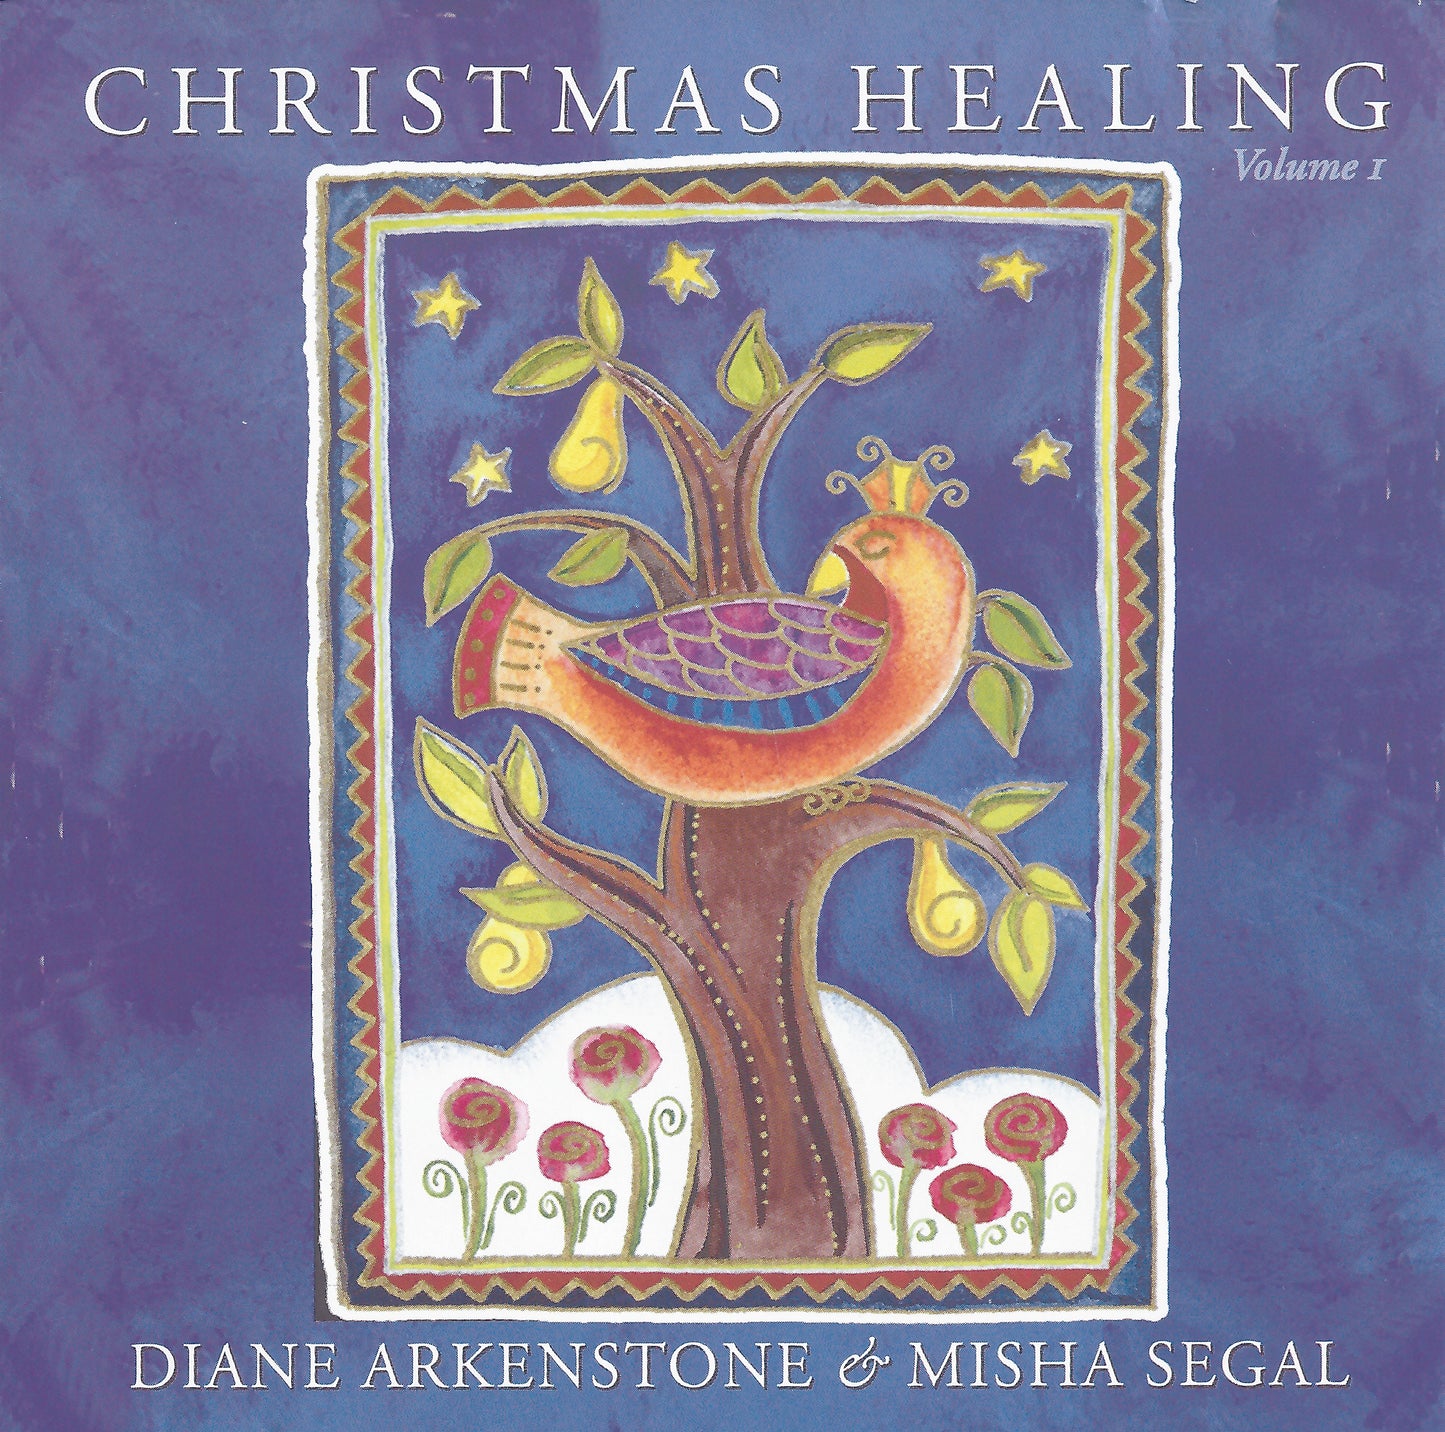 We Wish You a Merry Christmas - Diane Arkenstone & Misha Segal